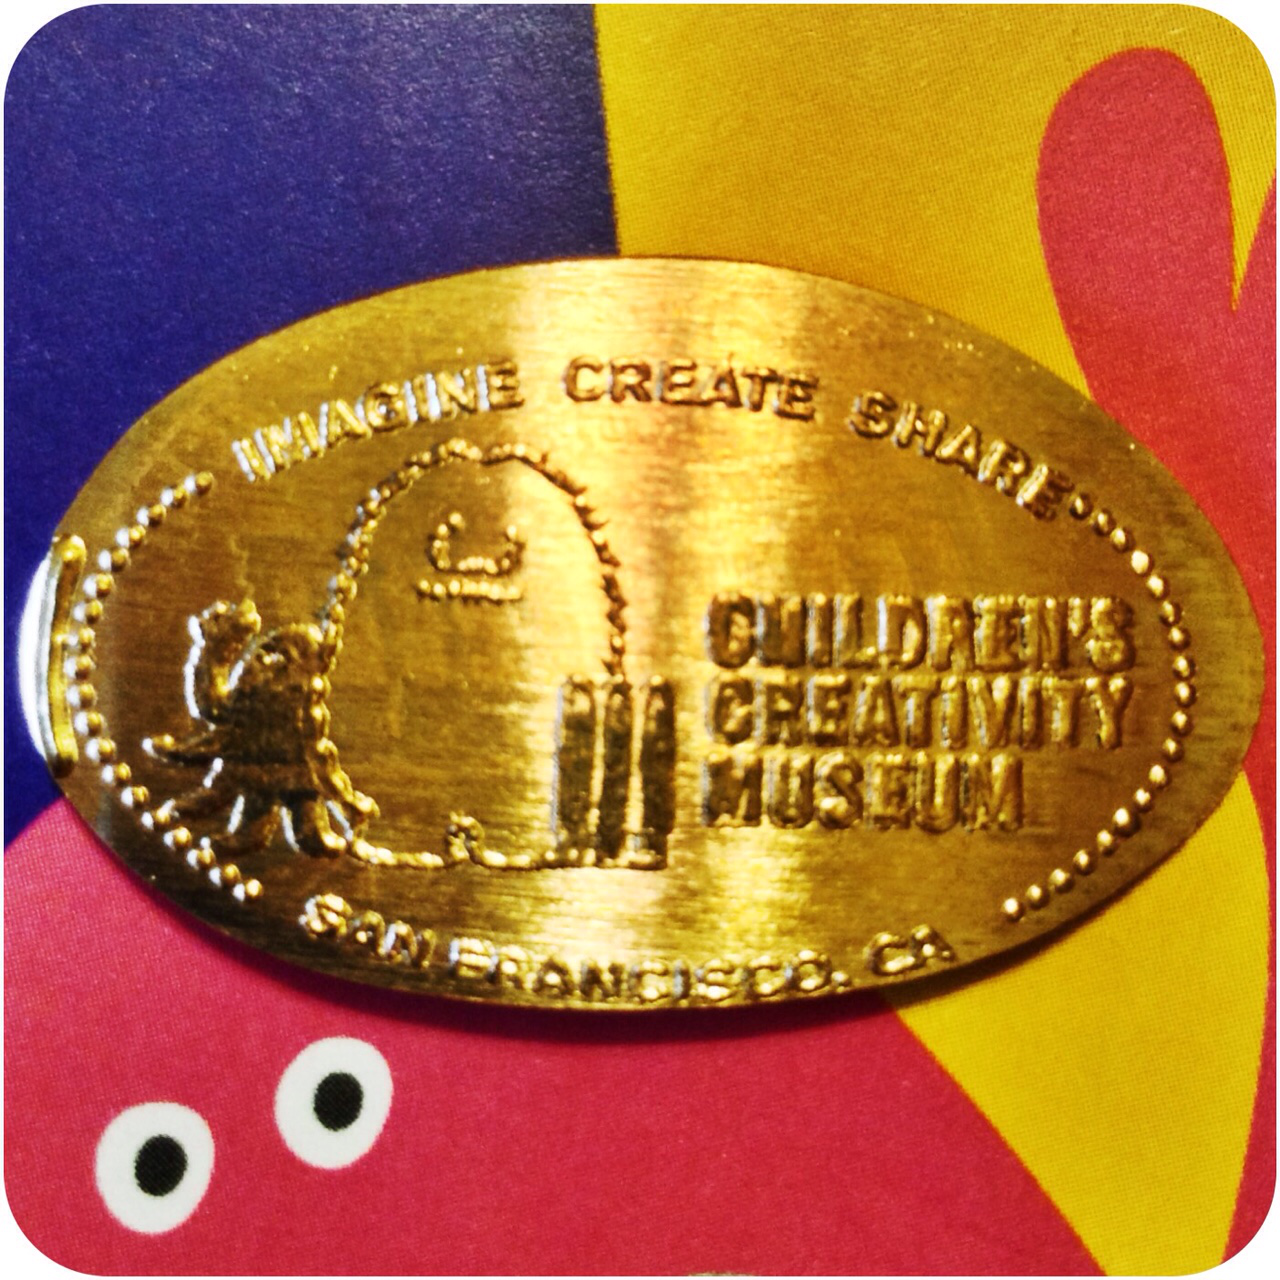 Octopus Rockto, Zump and The Kromas, Children's Creativity Museum, San Francisco